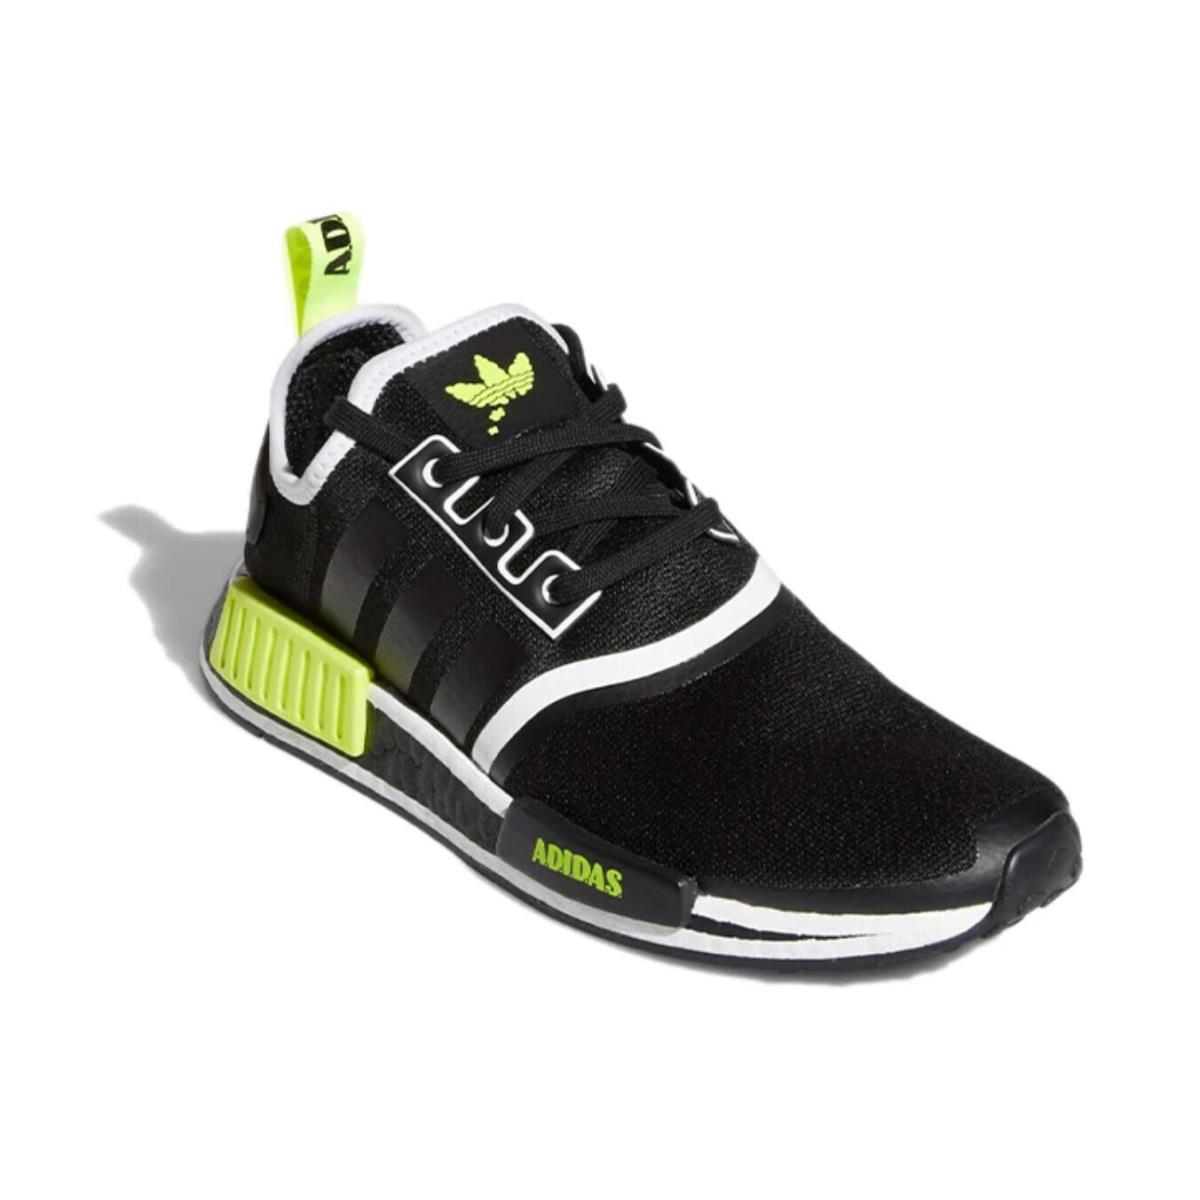 Mens Adidas Originals Nmd R1 Runner Running Shoes Size US 9.5 GV7183